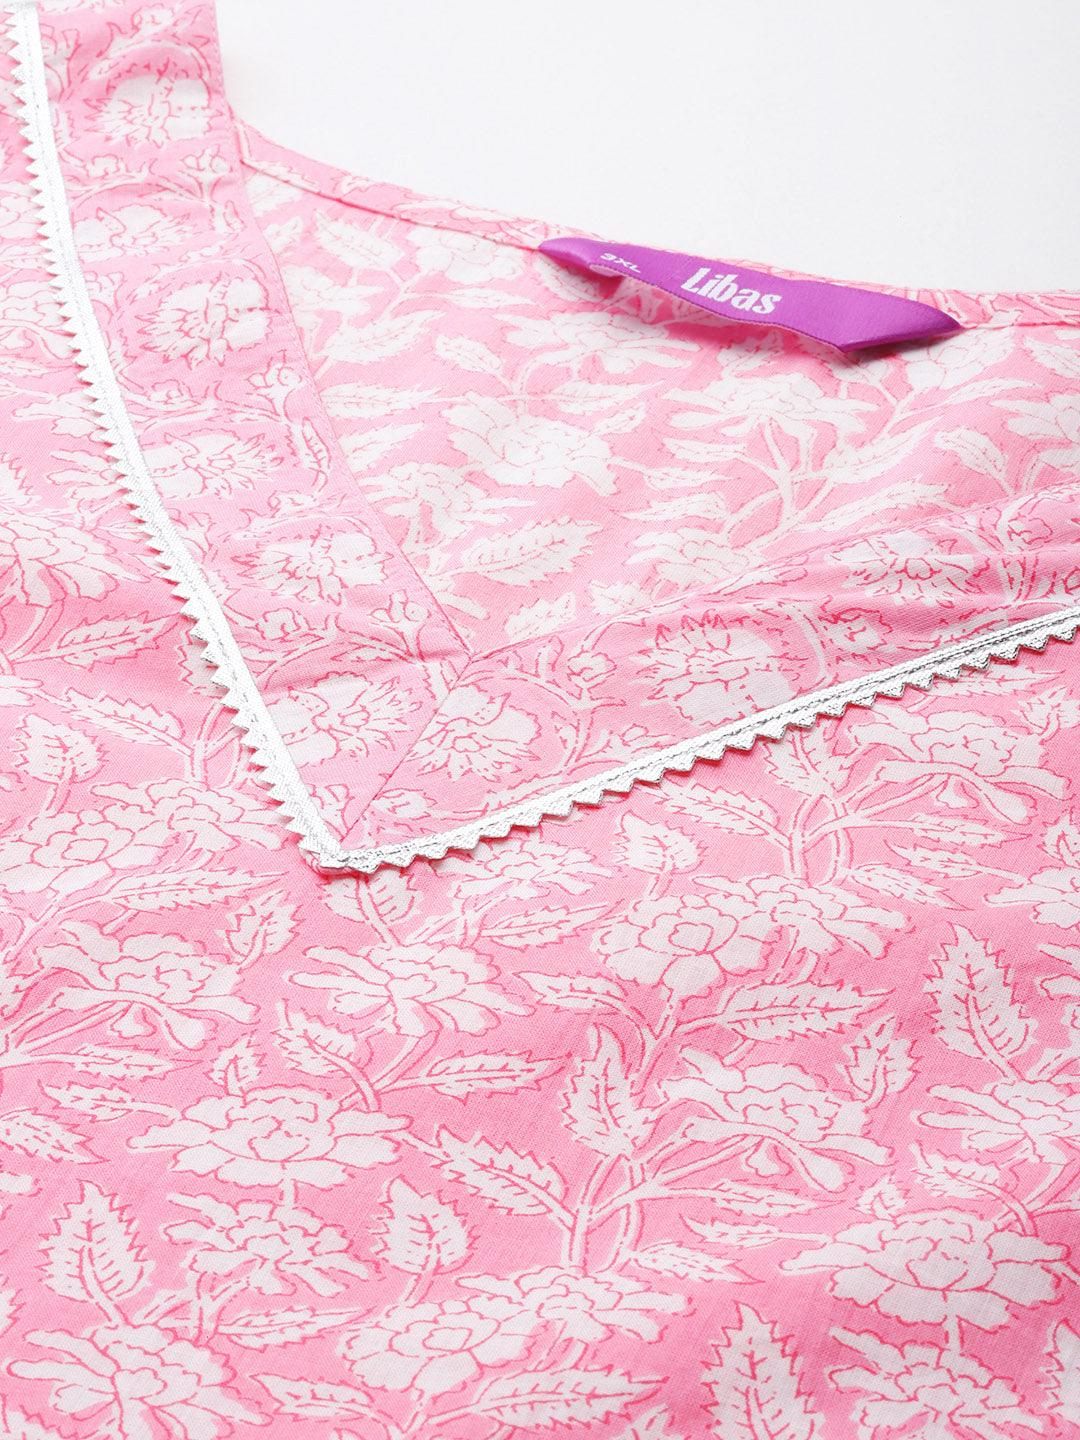 Plus Size Pink Printed Cotton Straight Kurta With Palazzos & Dupatta - Libas